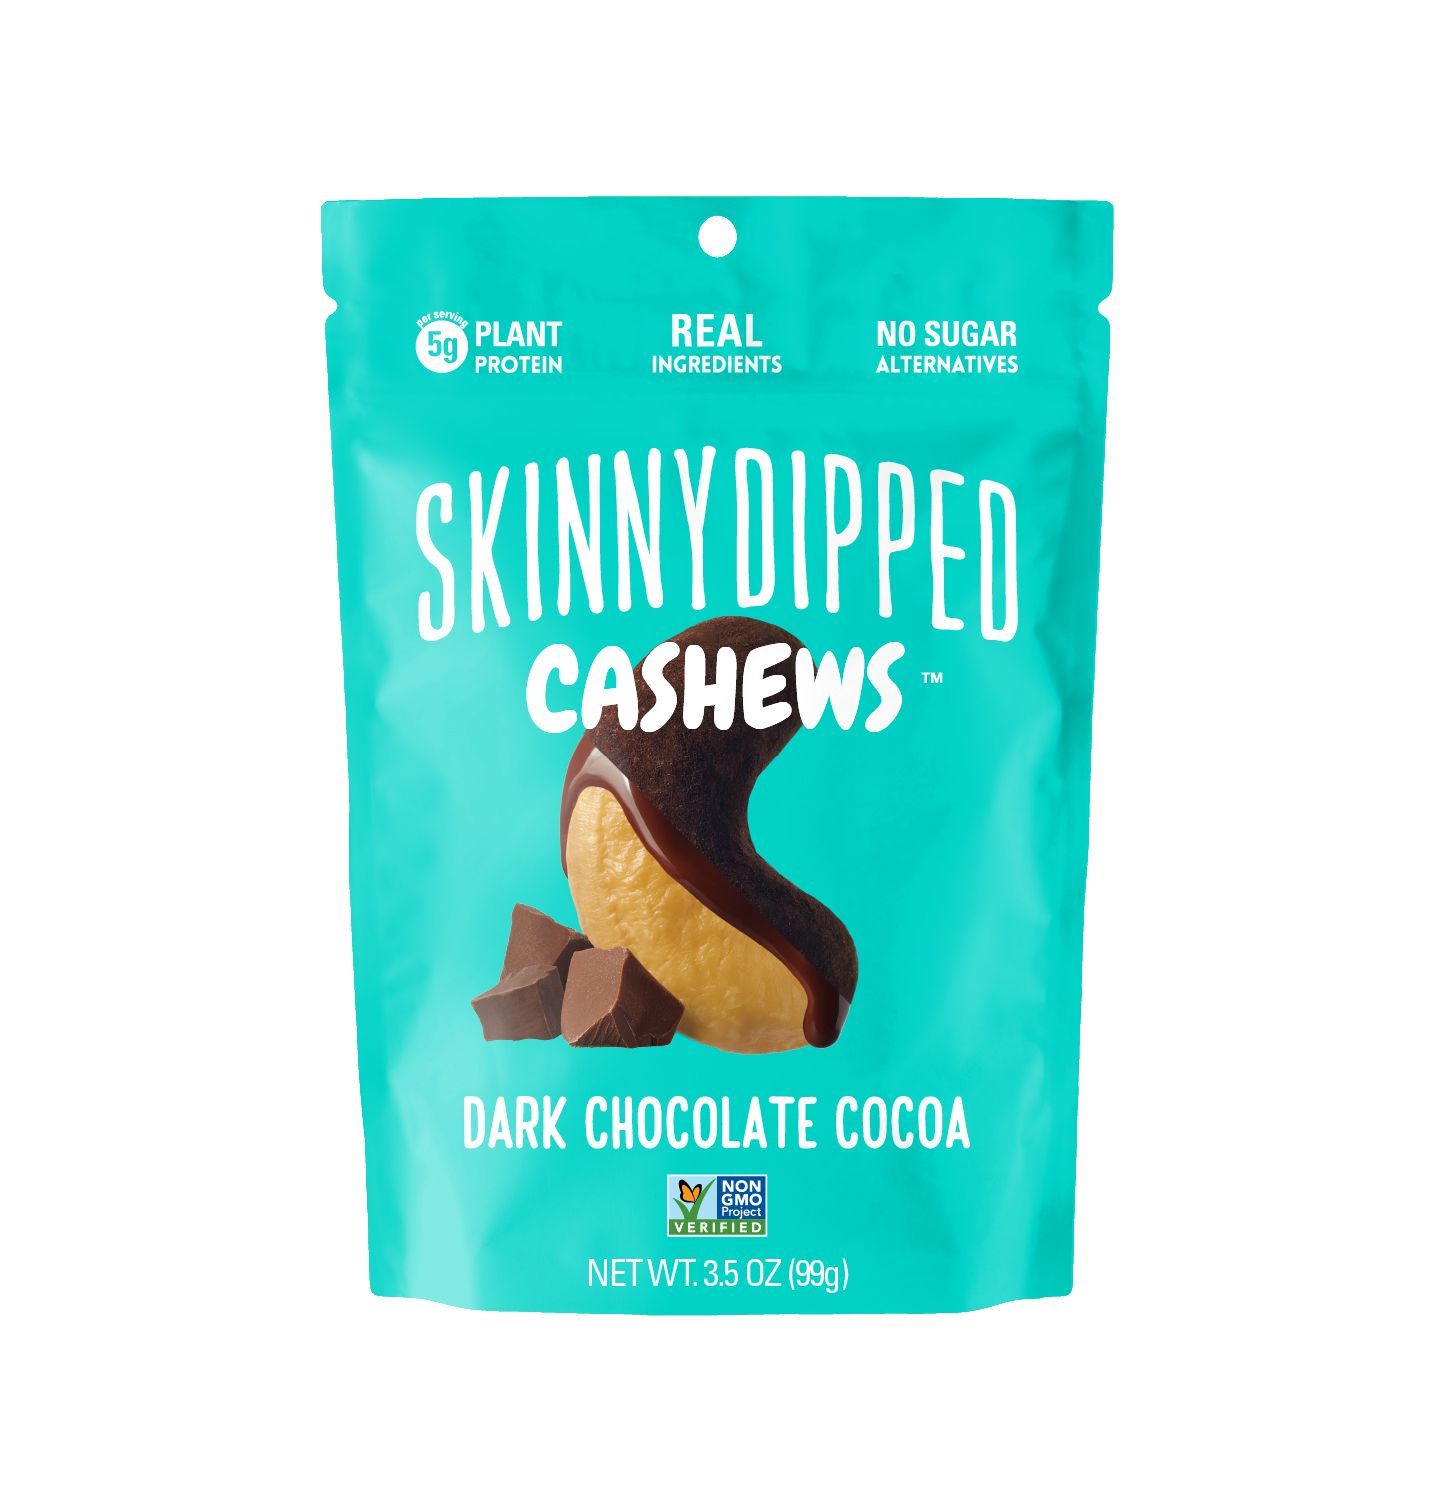 Dark Chocolate Cocoa Cashews